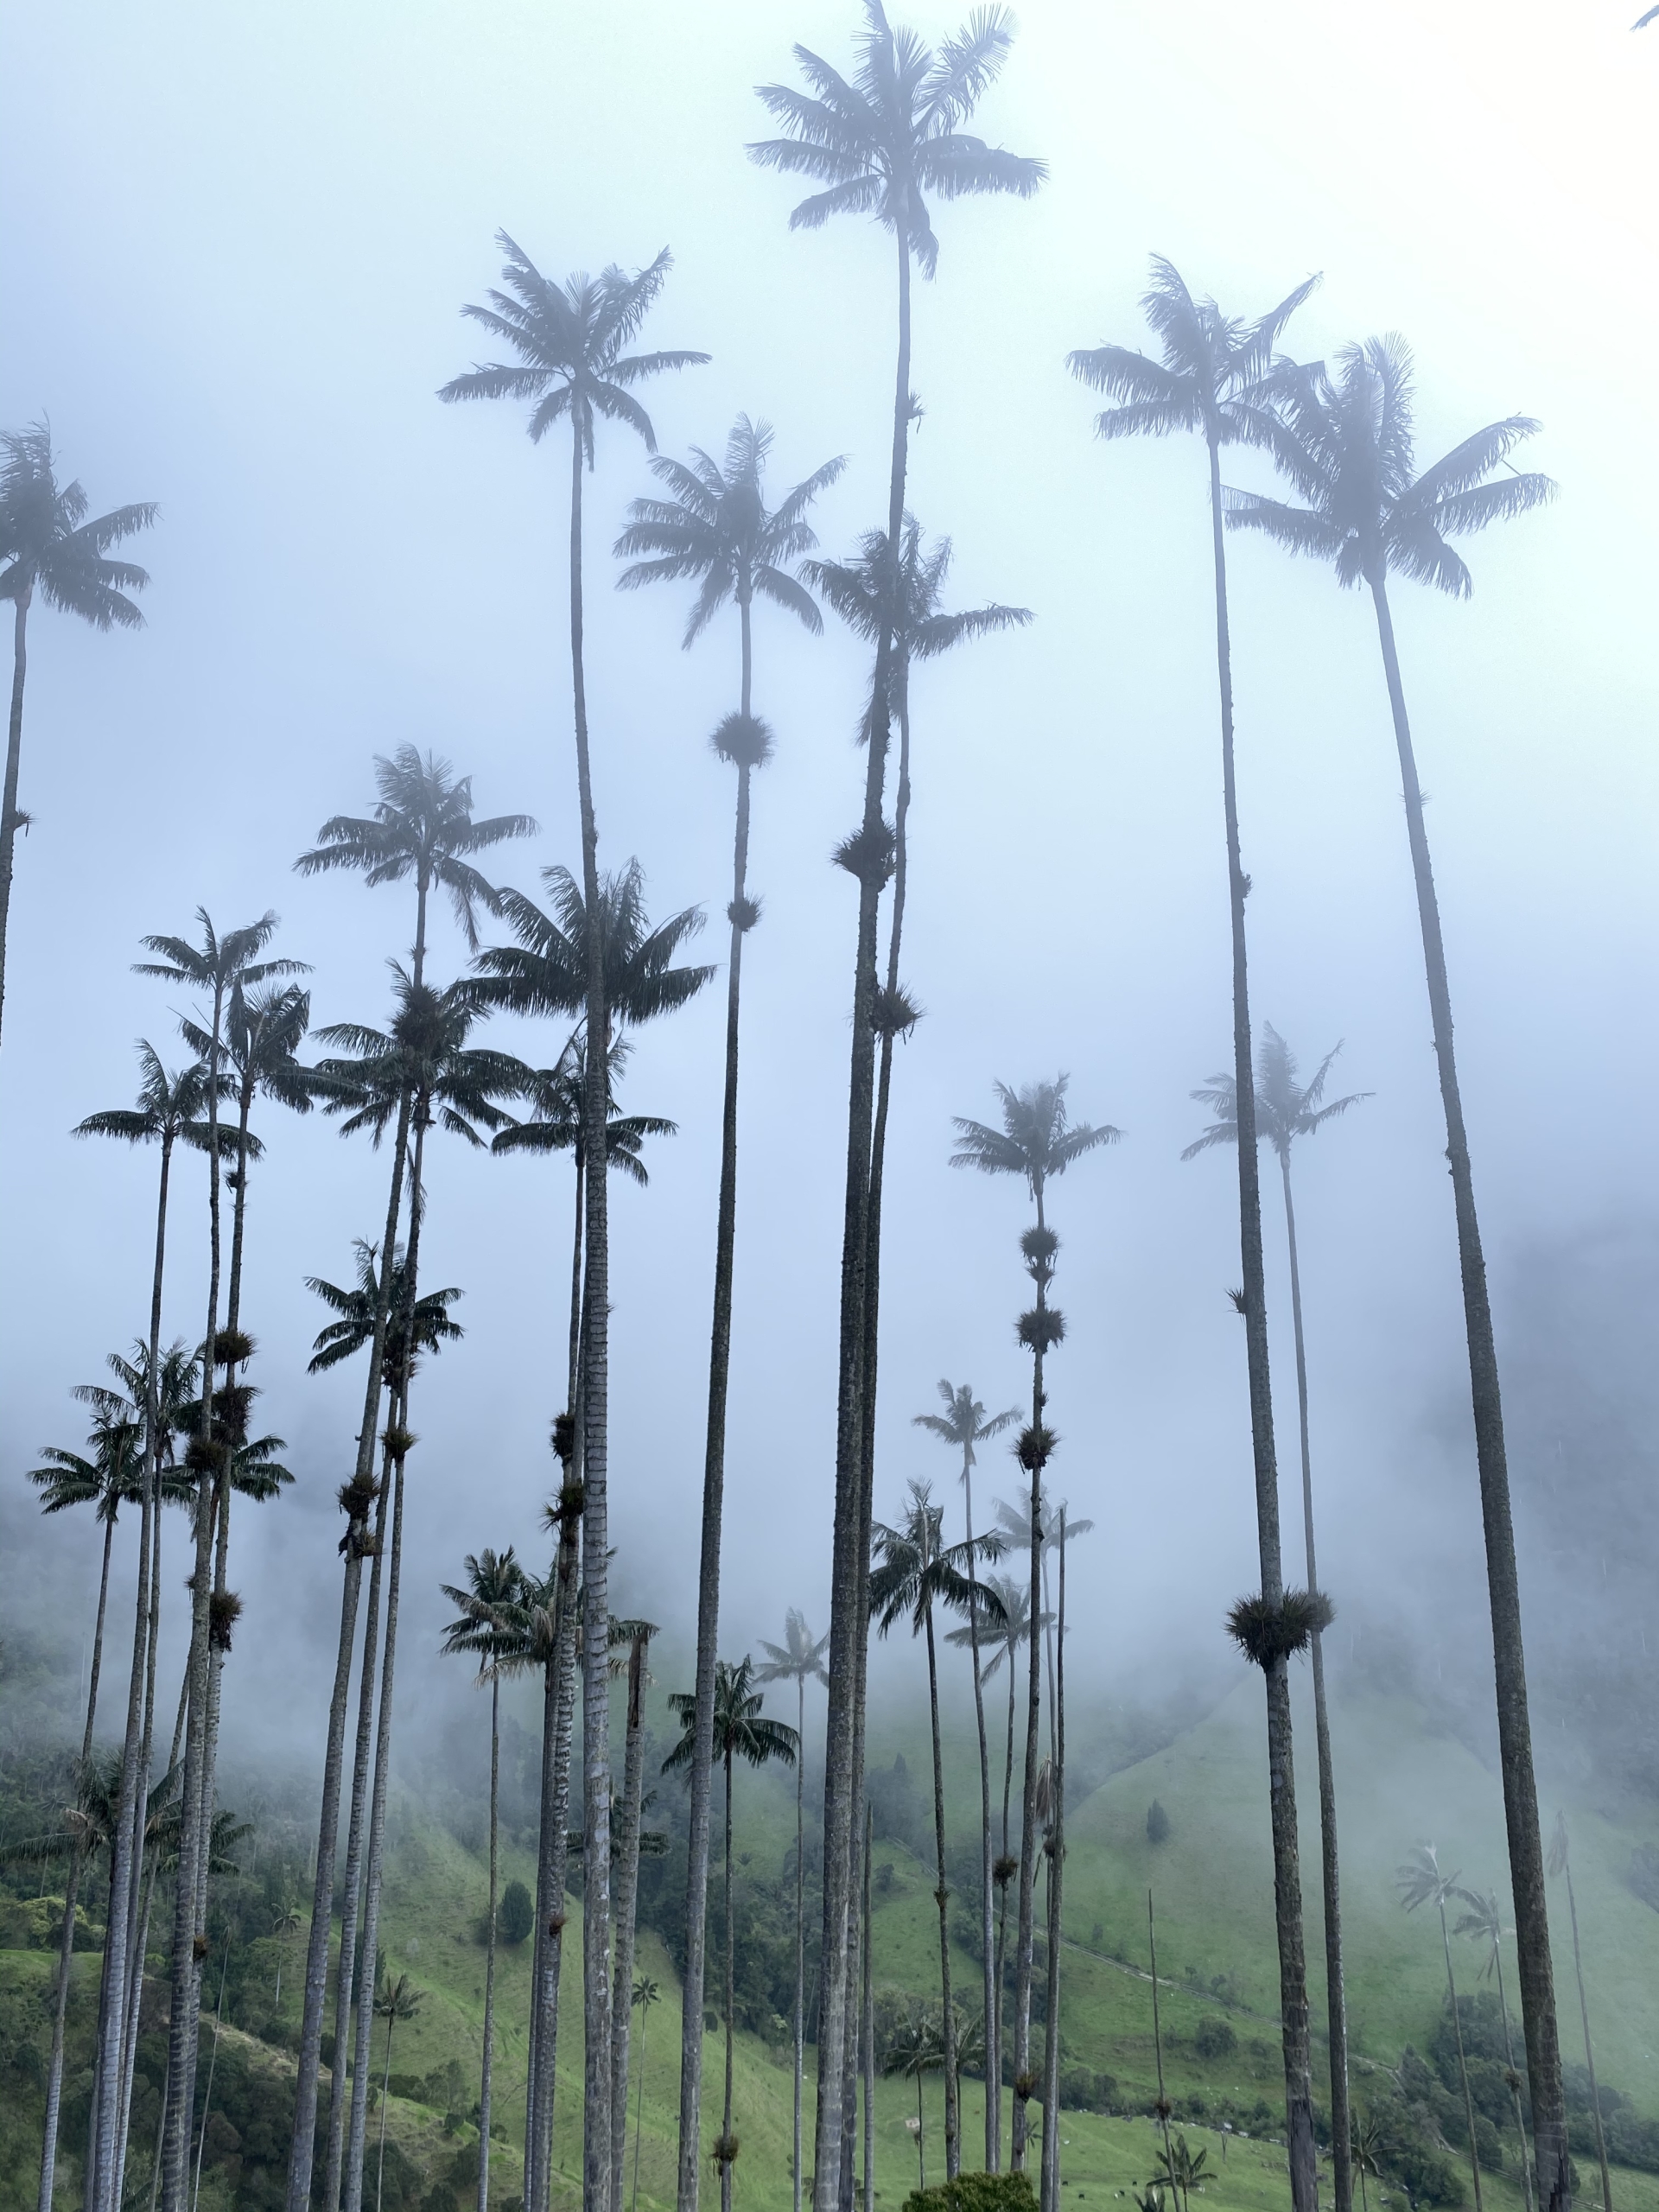 Valle de Cocora - vysoké palmy v hmle